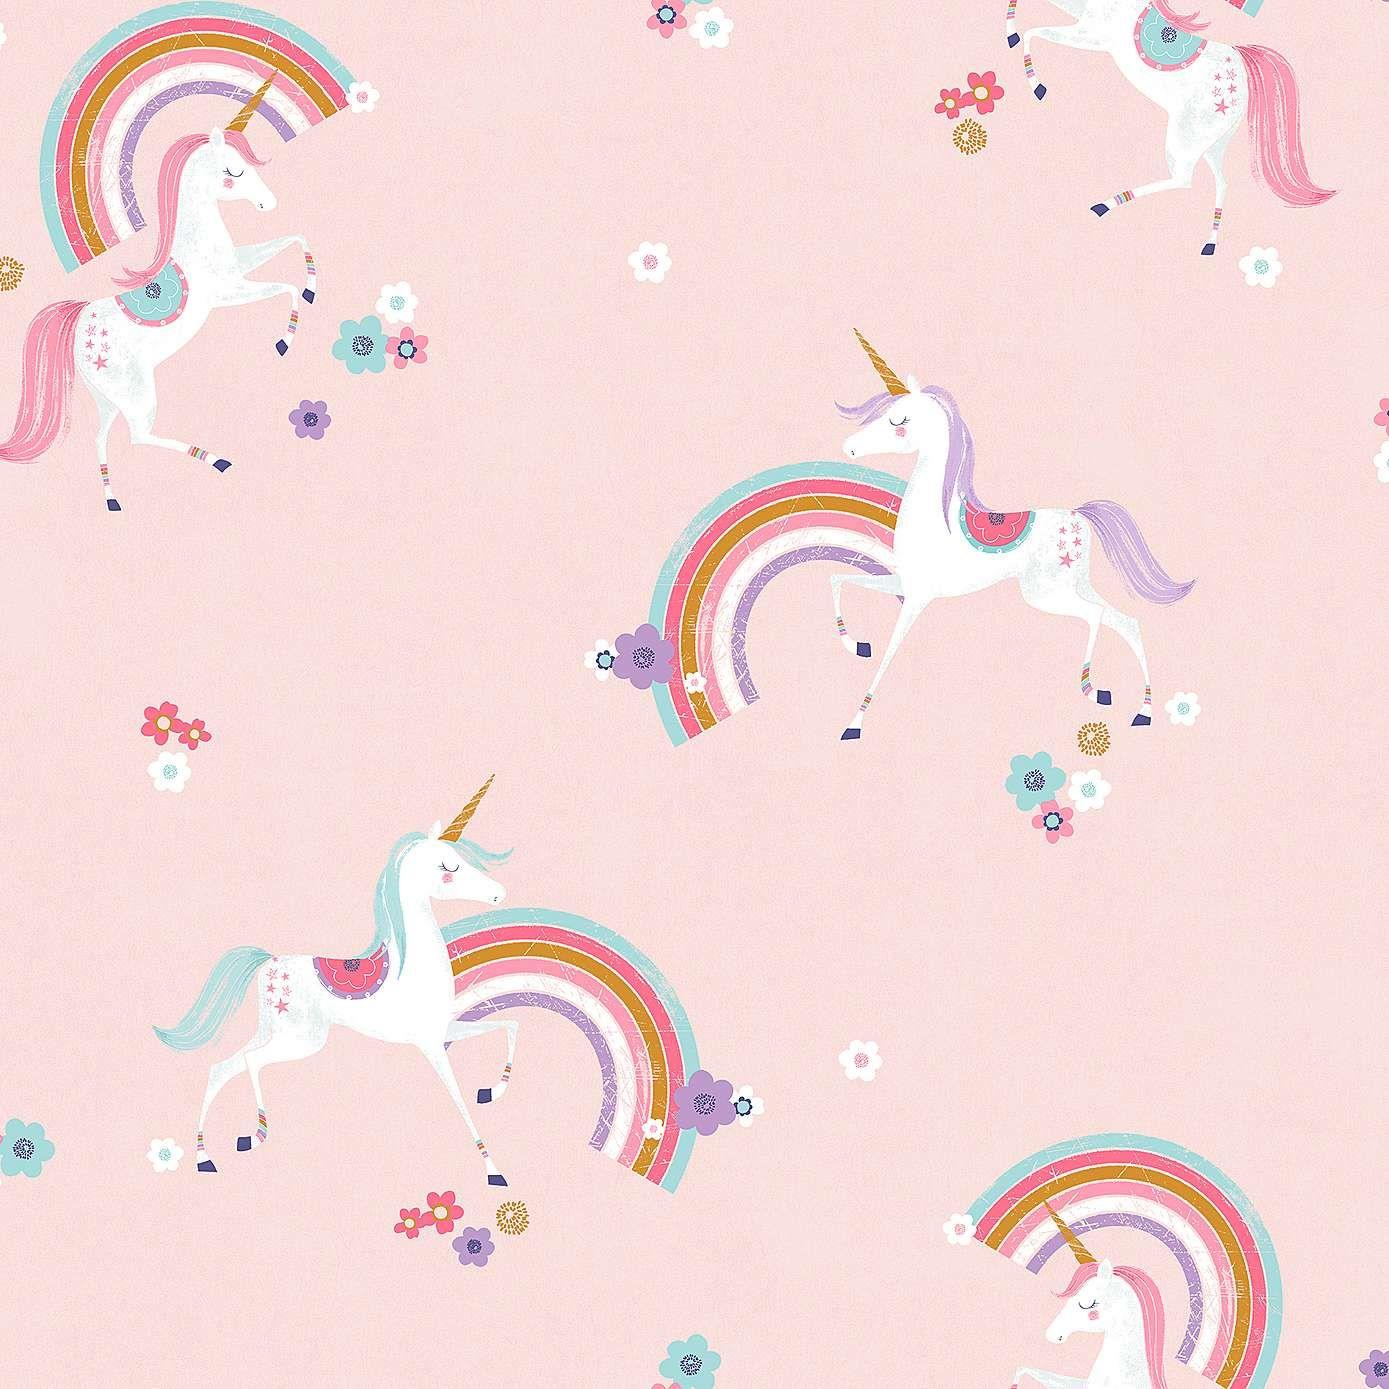 Unicorn Print Wallpapers - Top Free Unicorn Print Backgrounds ...